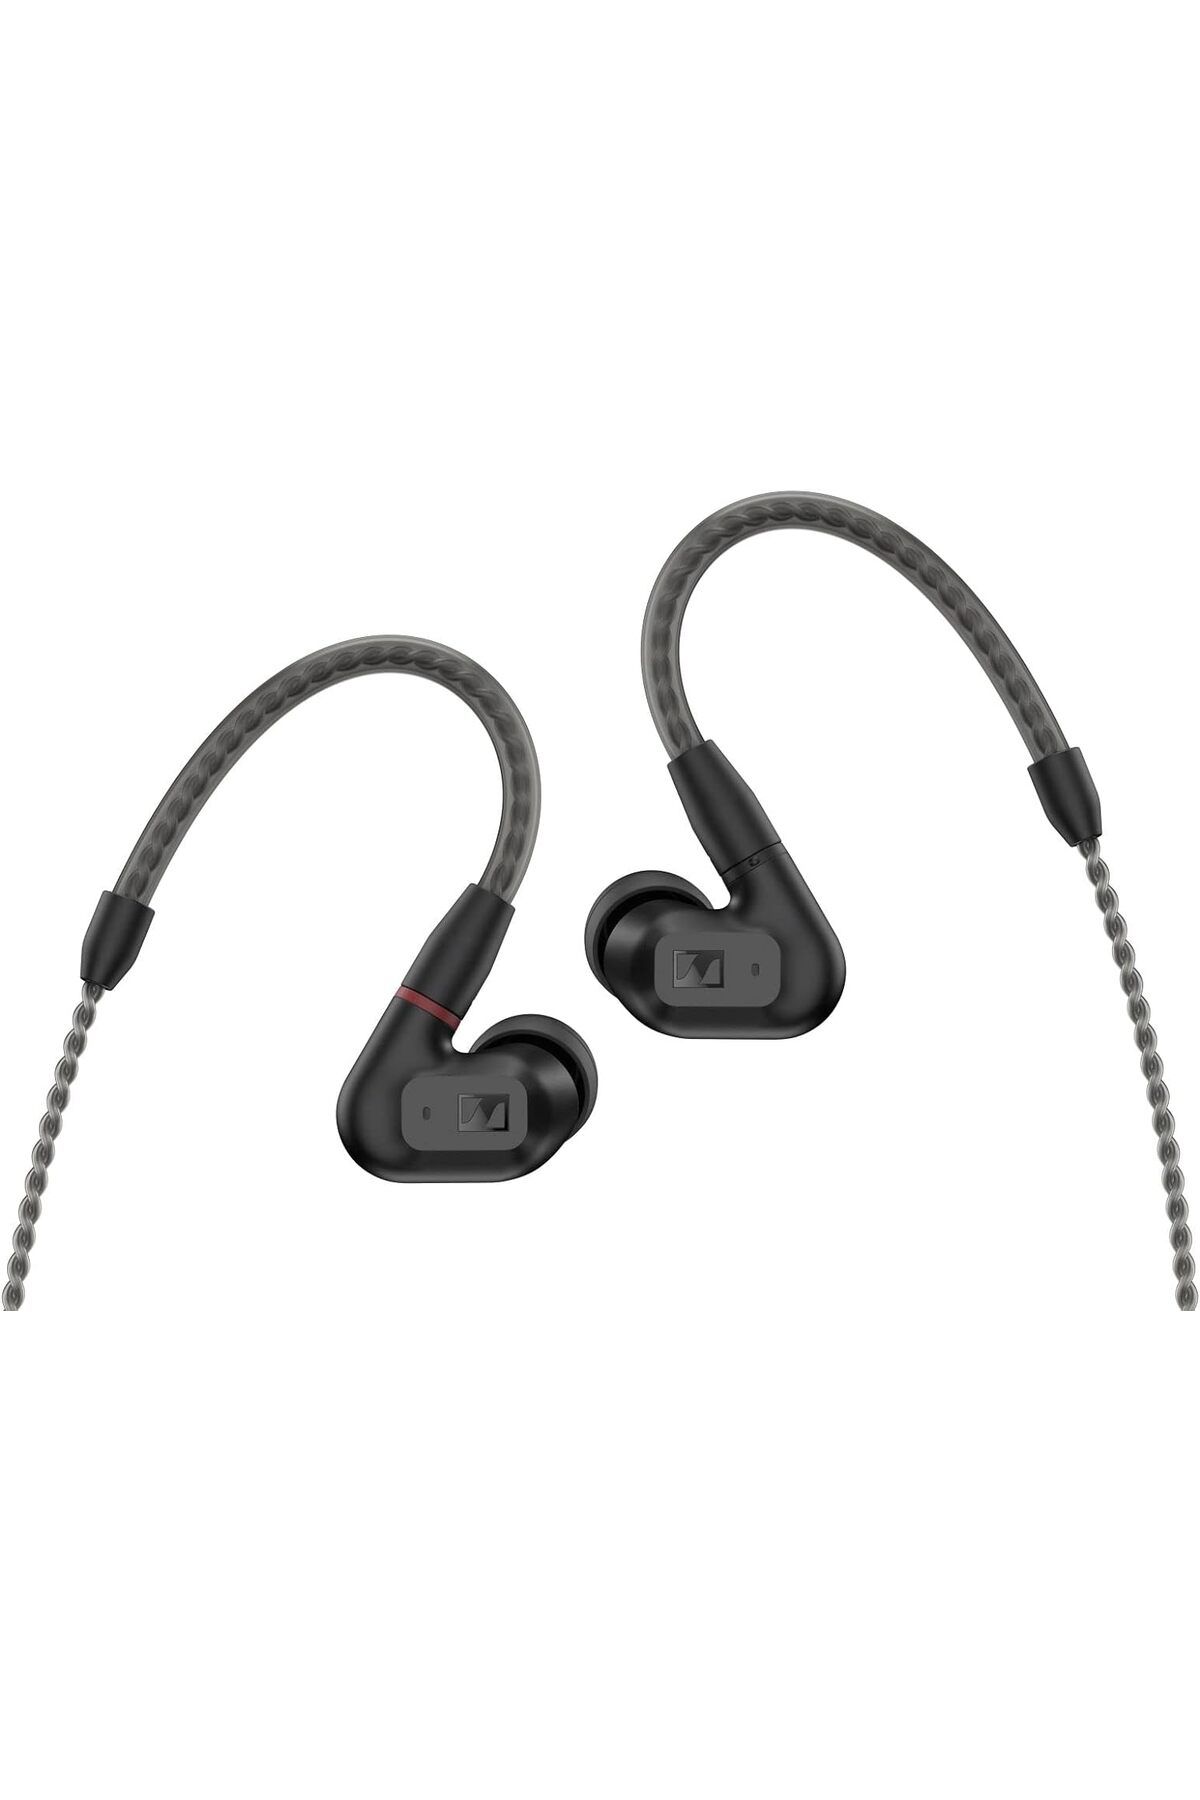 Sennheiser Ie 200 Kablolu Audiophile Stereo Kulaklık - Kablolu Kulak Içi Kulaklık - Net, Üstün Hi-fi